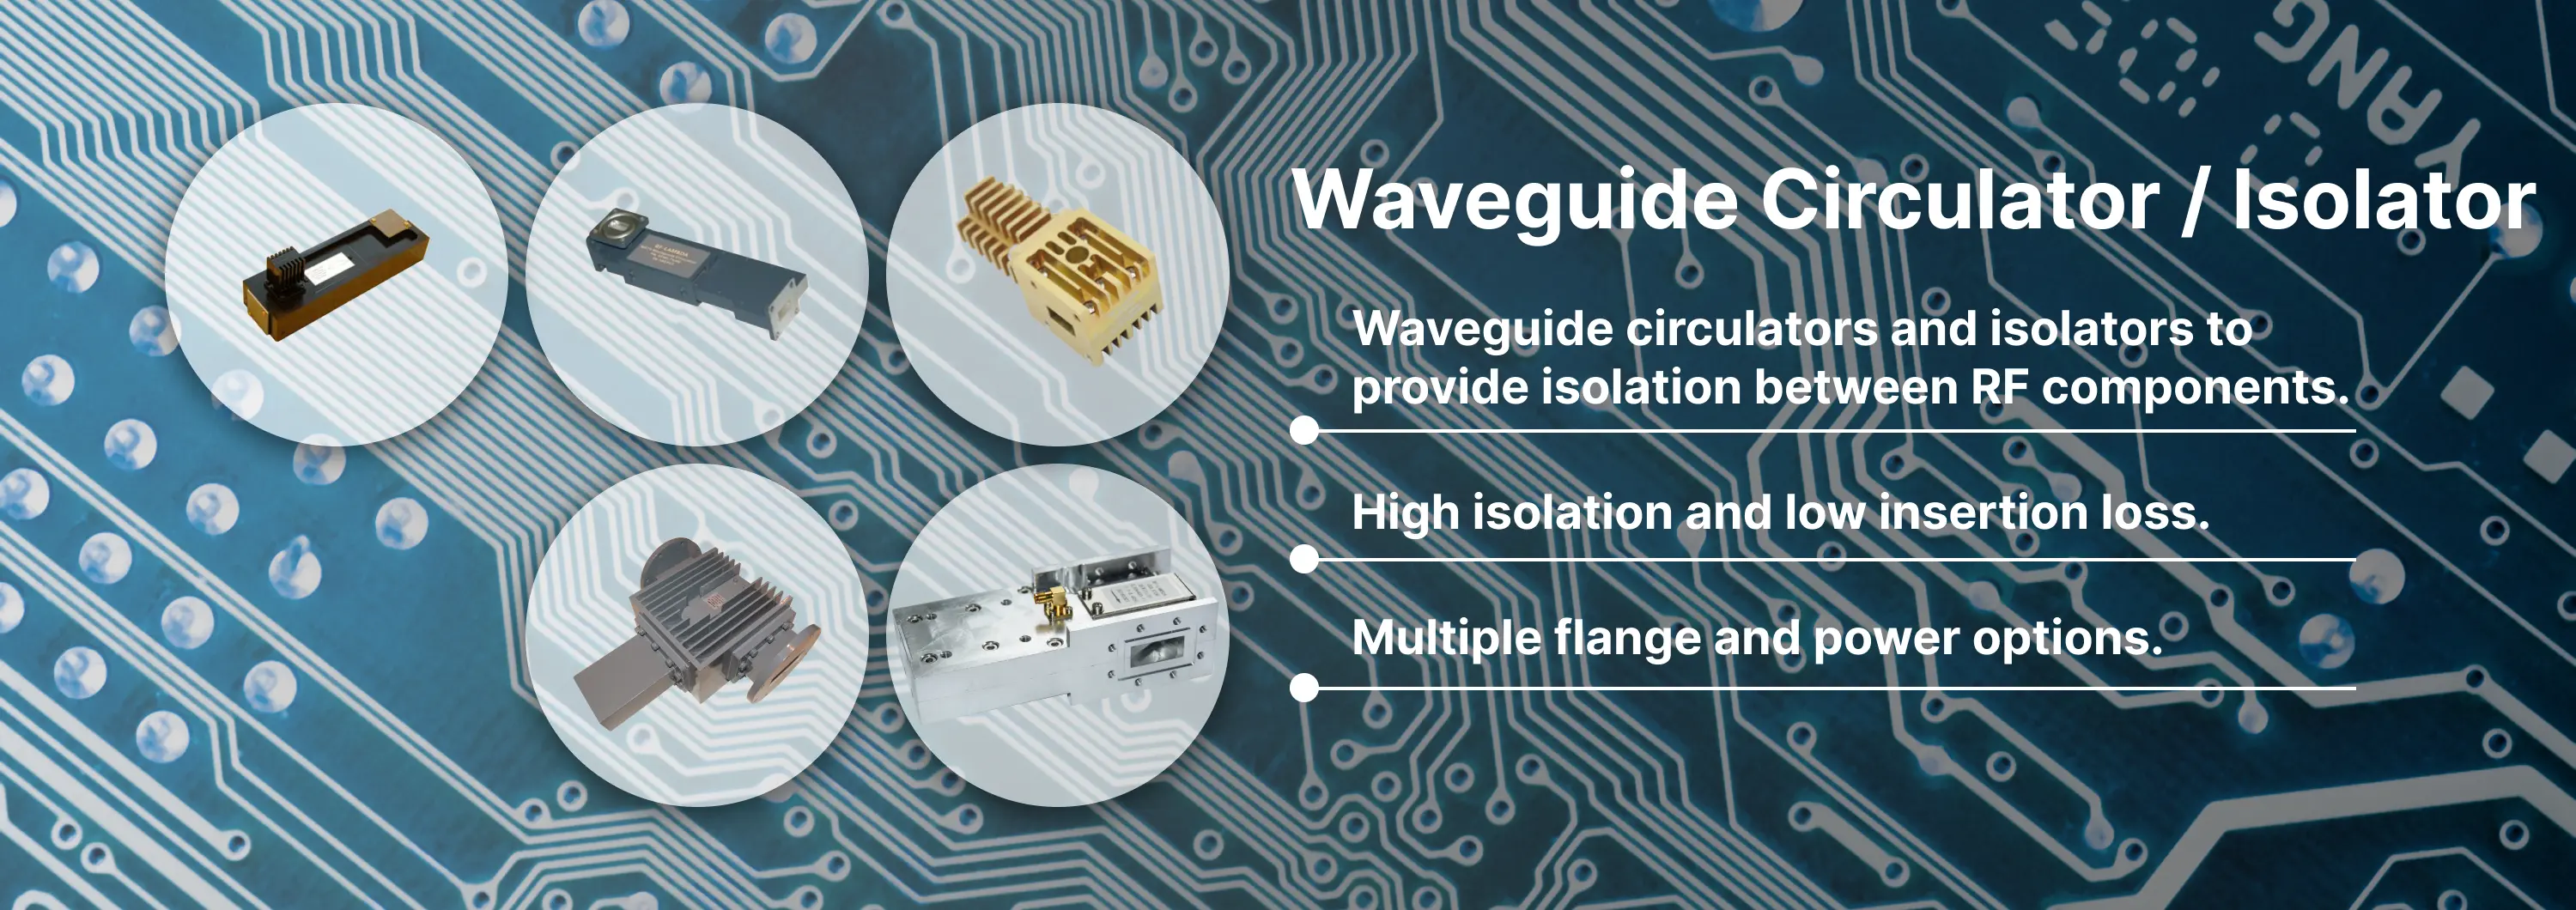 Waveguide Circulator/Isolator Banner